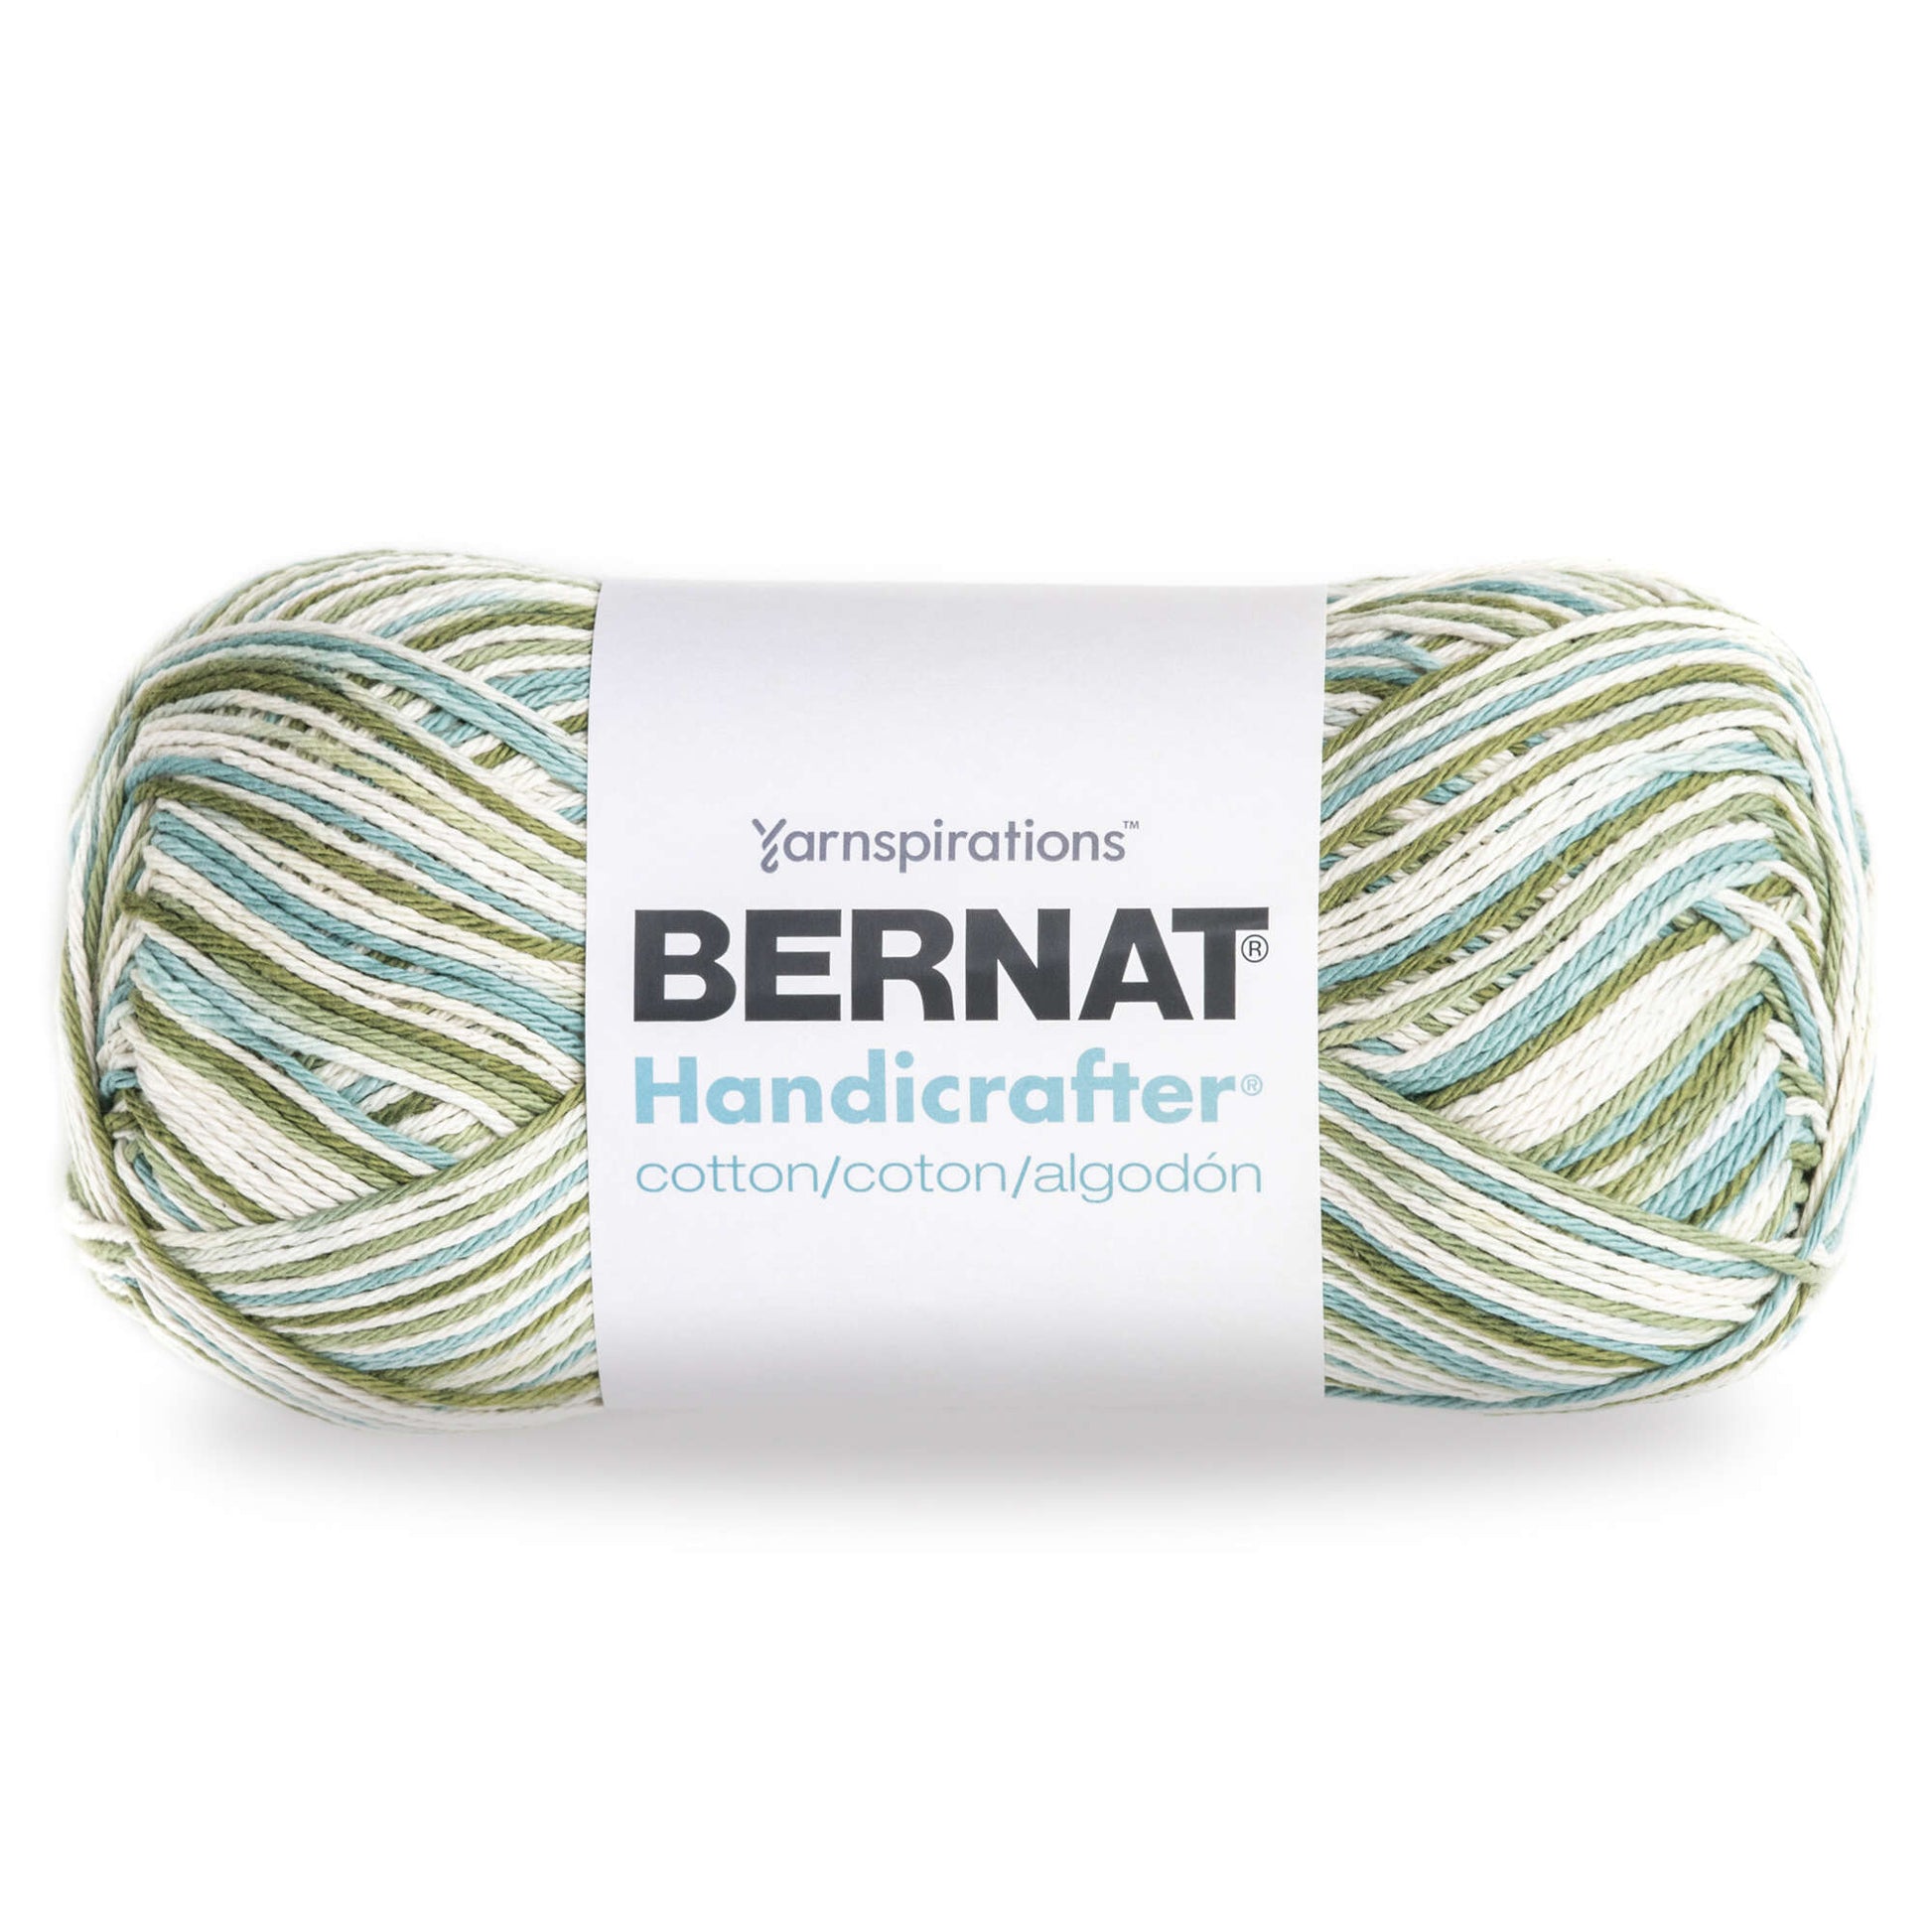 Bernat Handicrafter Cotton Ombres Yarn (340g/12oz) - Discontinued Shades Emerald Isle